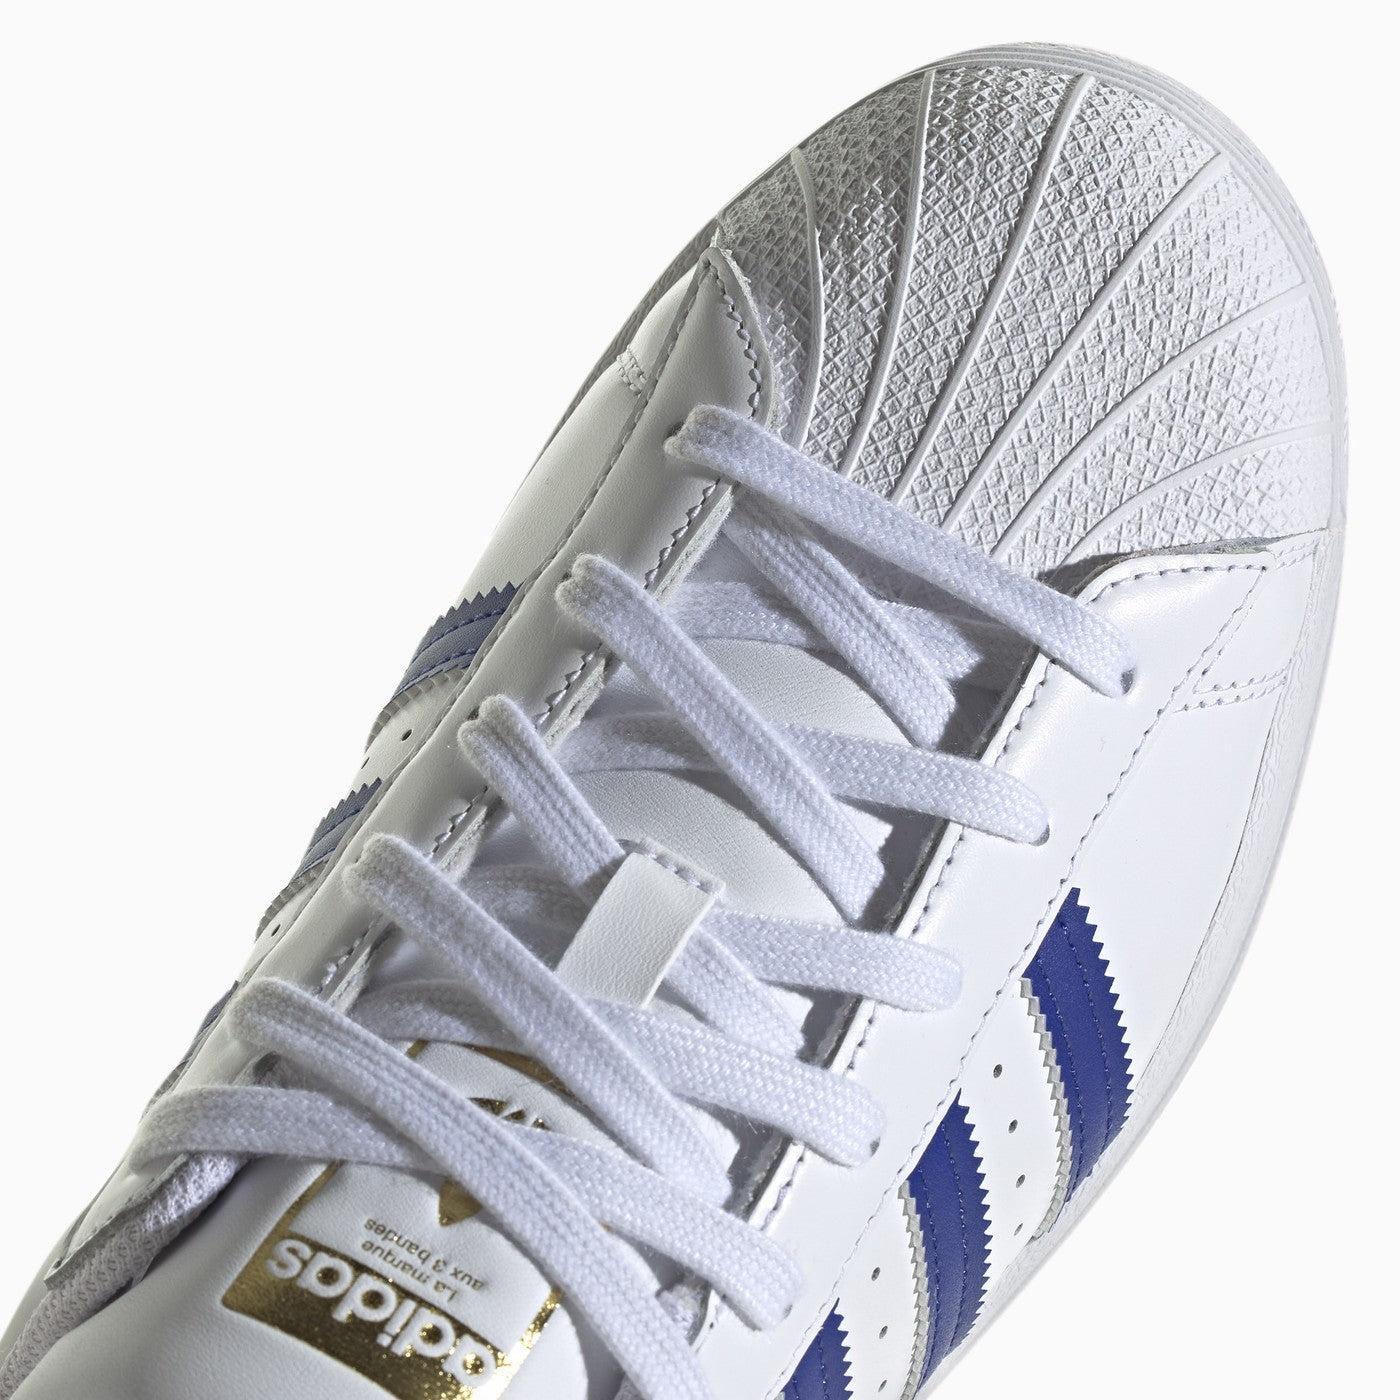 adidas Originals /blue Superstar Sneakers | Lyst